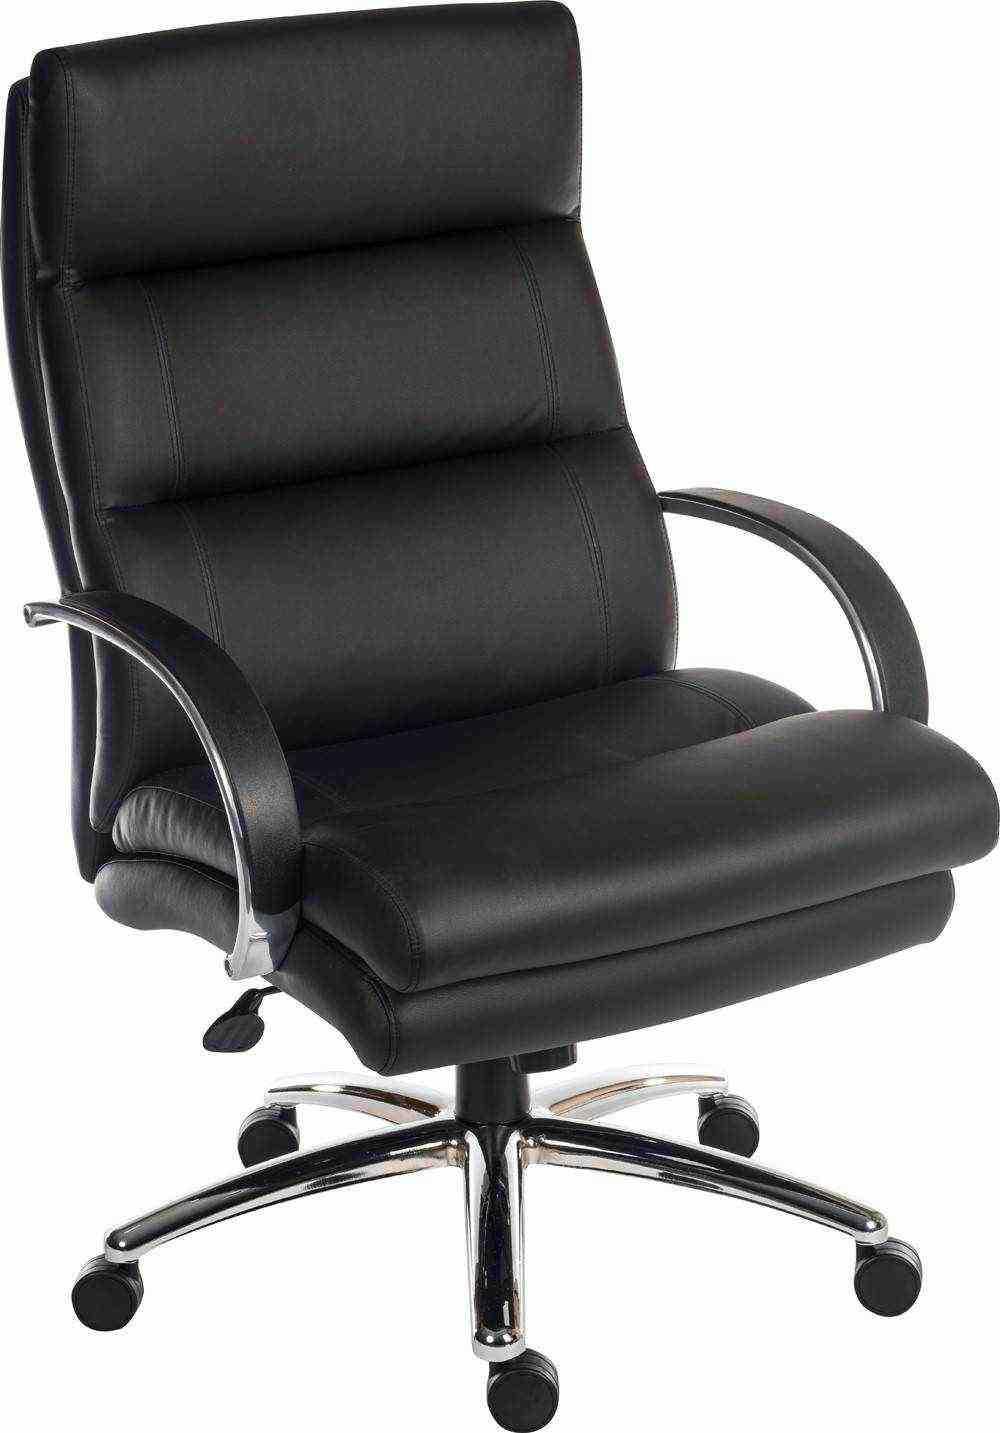 Samson heavy duty exec office chair - crimblefest furniture - image 1